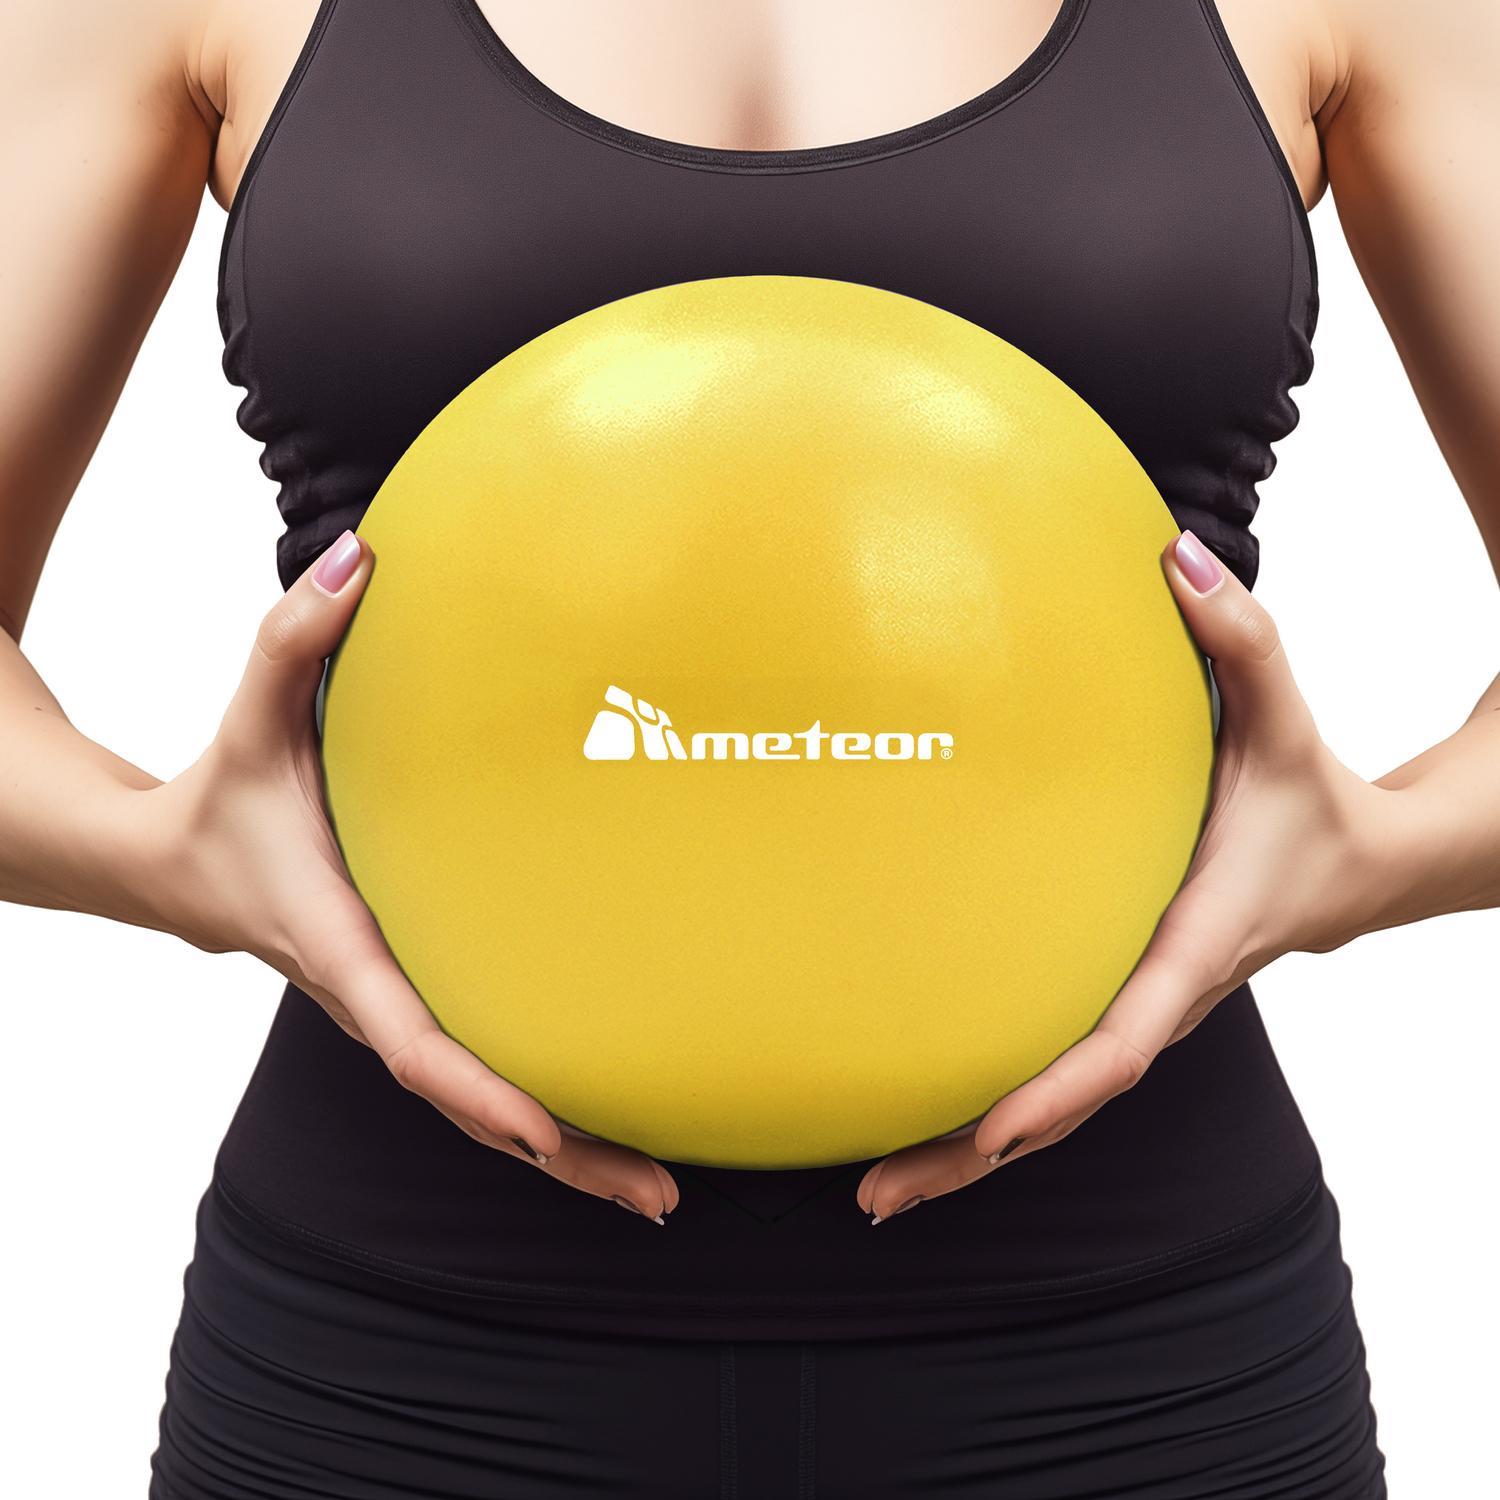 METEOR 20CM Anti-Burst Yoga Ball,Swiss Ball,Pilates Ball for Exercise,Yoga,Pilates,Physio Therapy,Rehab,Office - Yellow x1PC